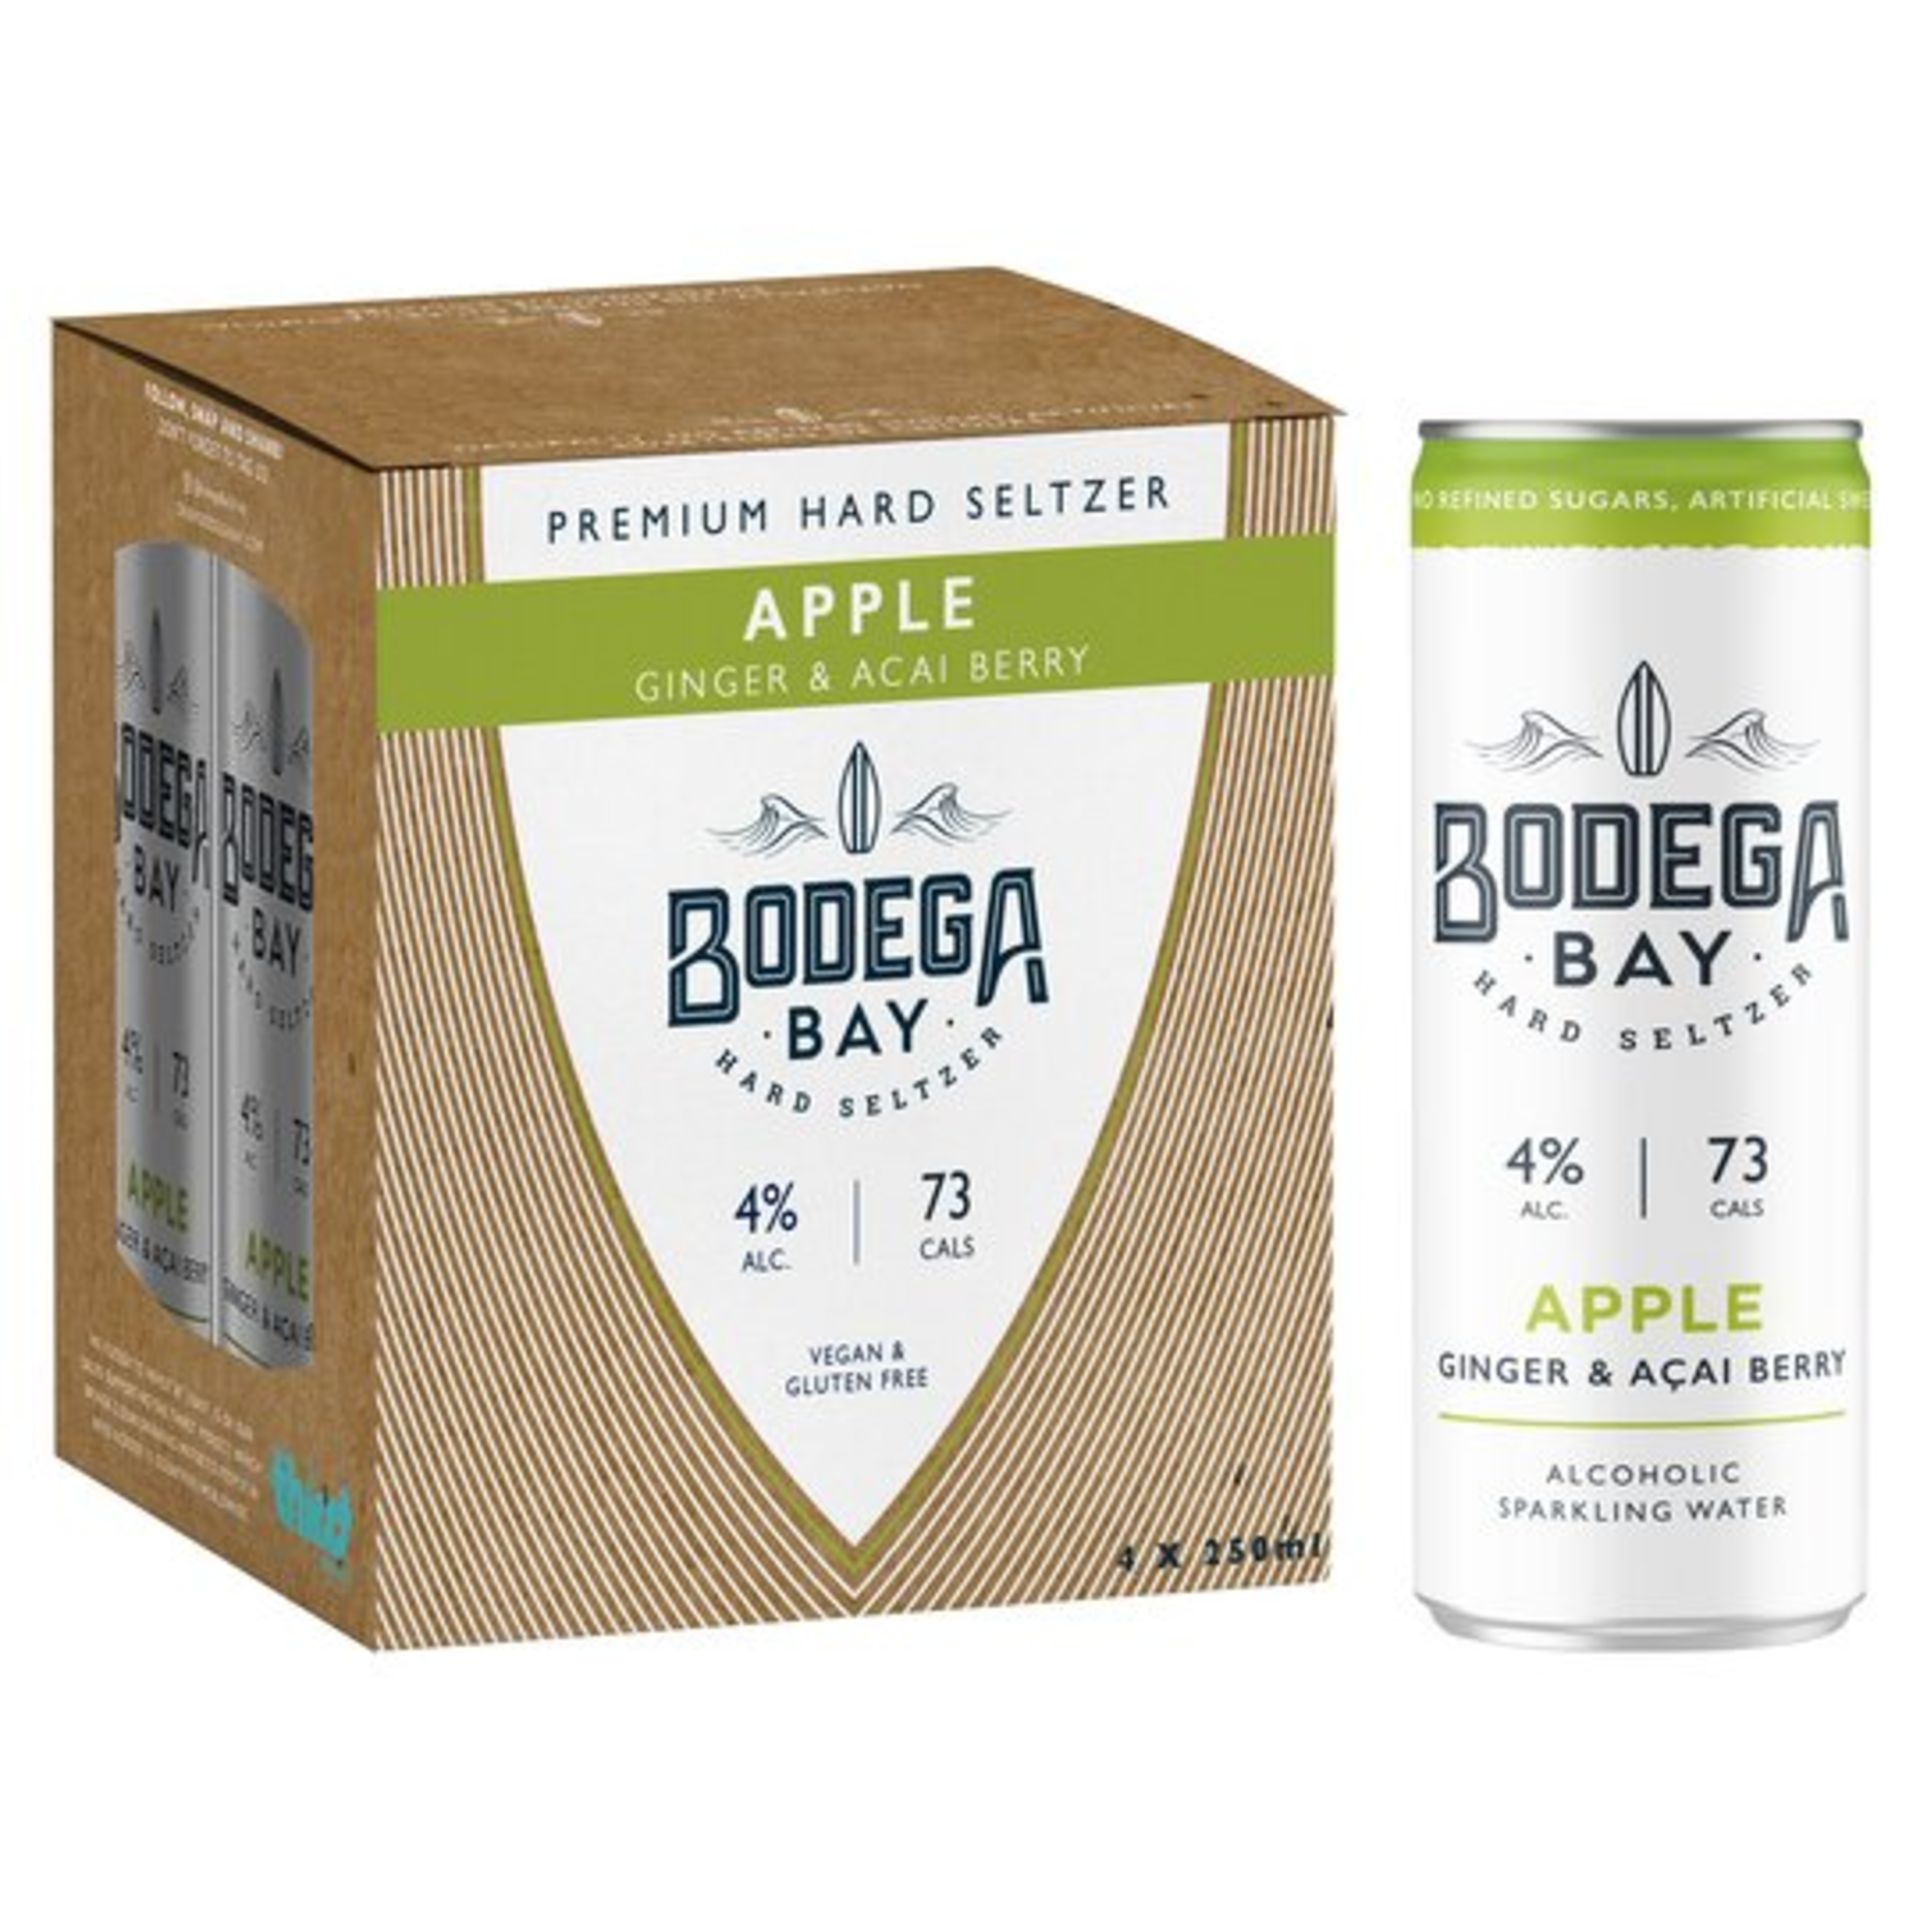 24 x Bodega Bay Hard Seltzer 250ml Alcoholic Sparkling Water Drinks - Apple Ginger & Acai Berry - Image 3 of 4